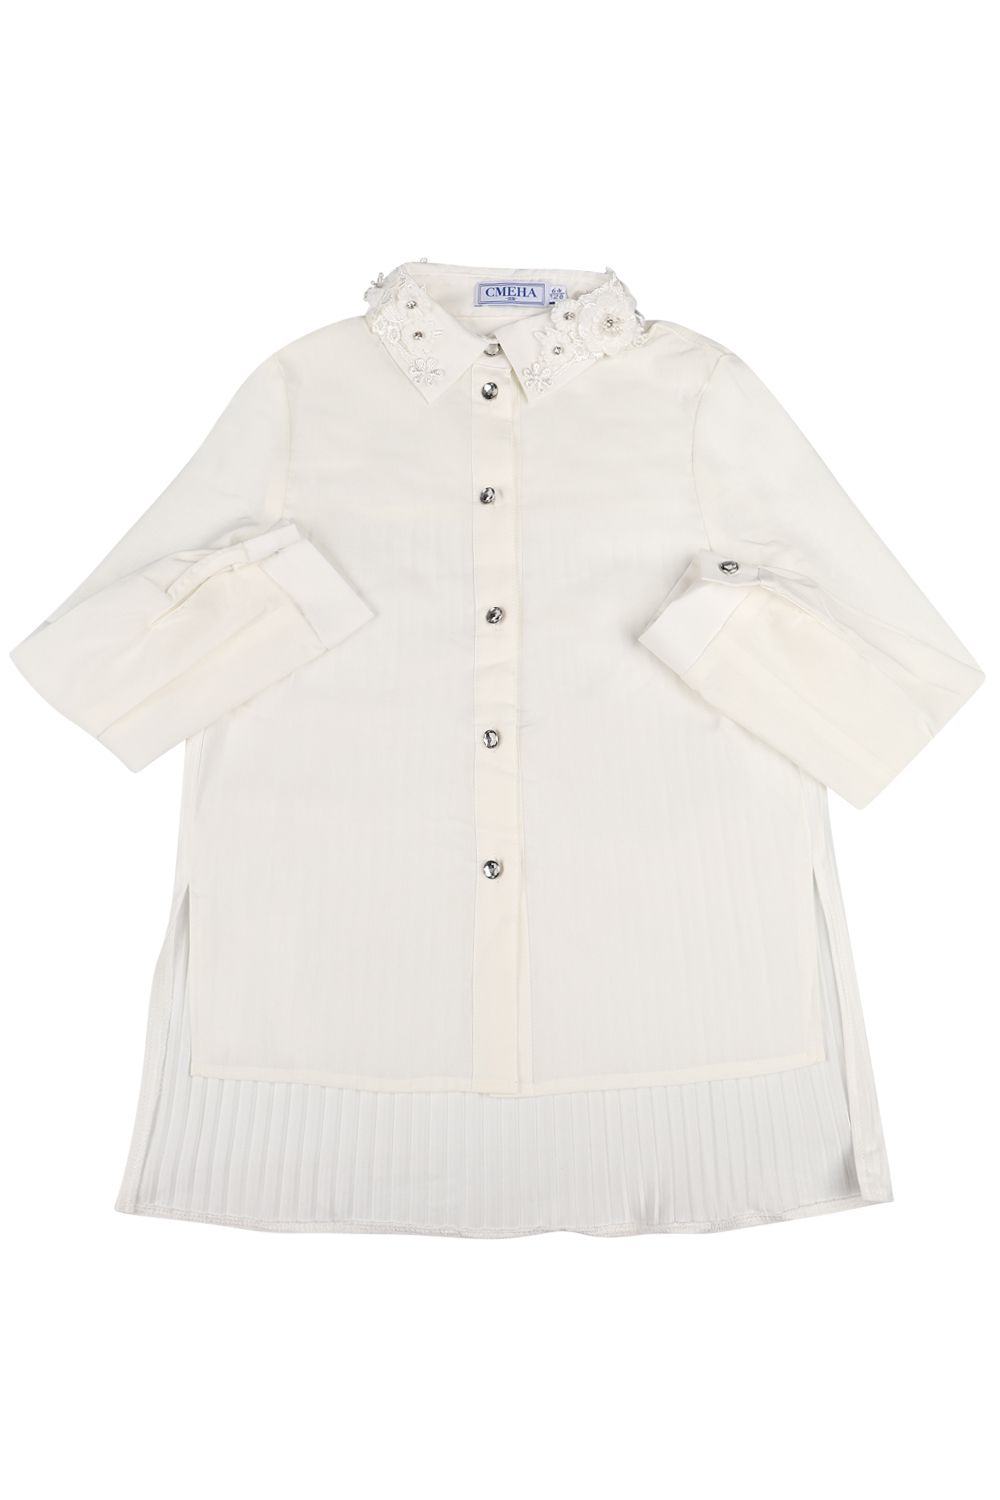 Блуза Смена, размер 134, цвет белый 19058 - фото 1